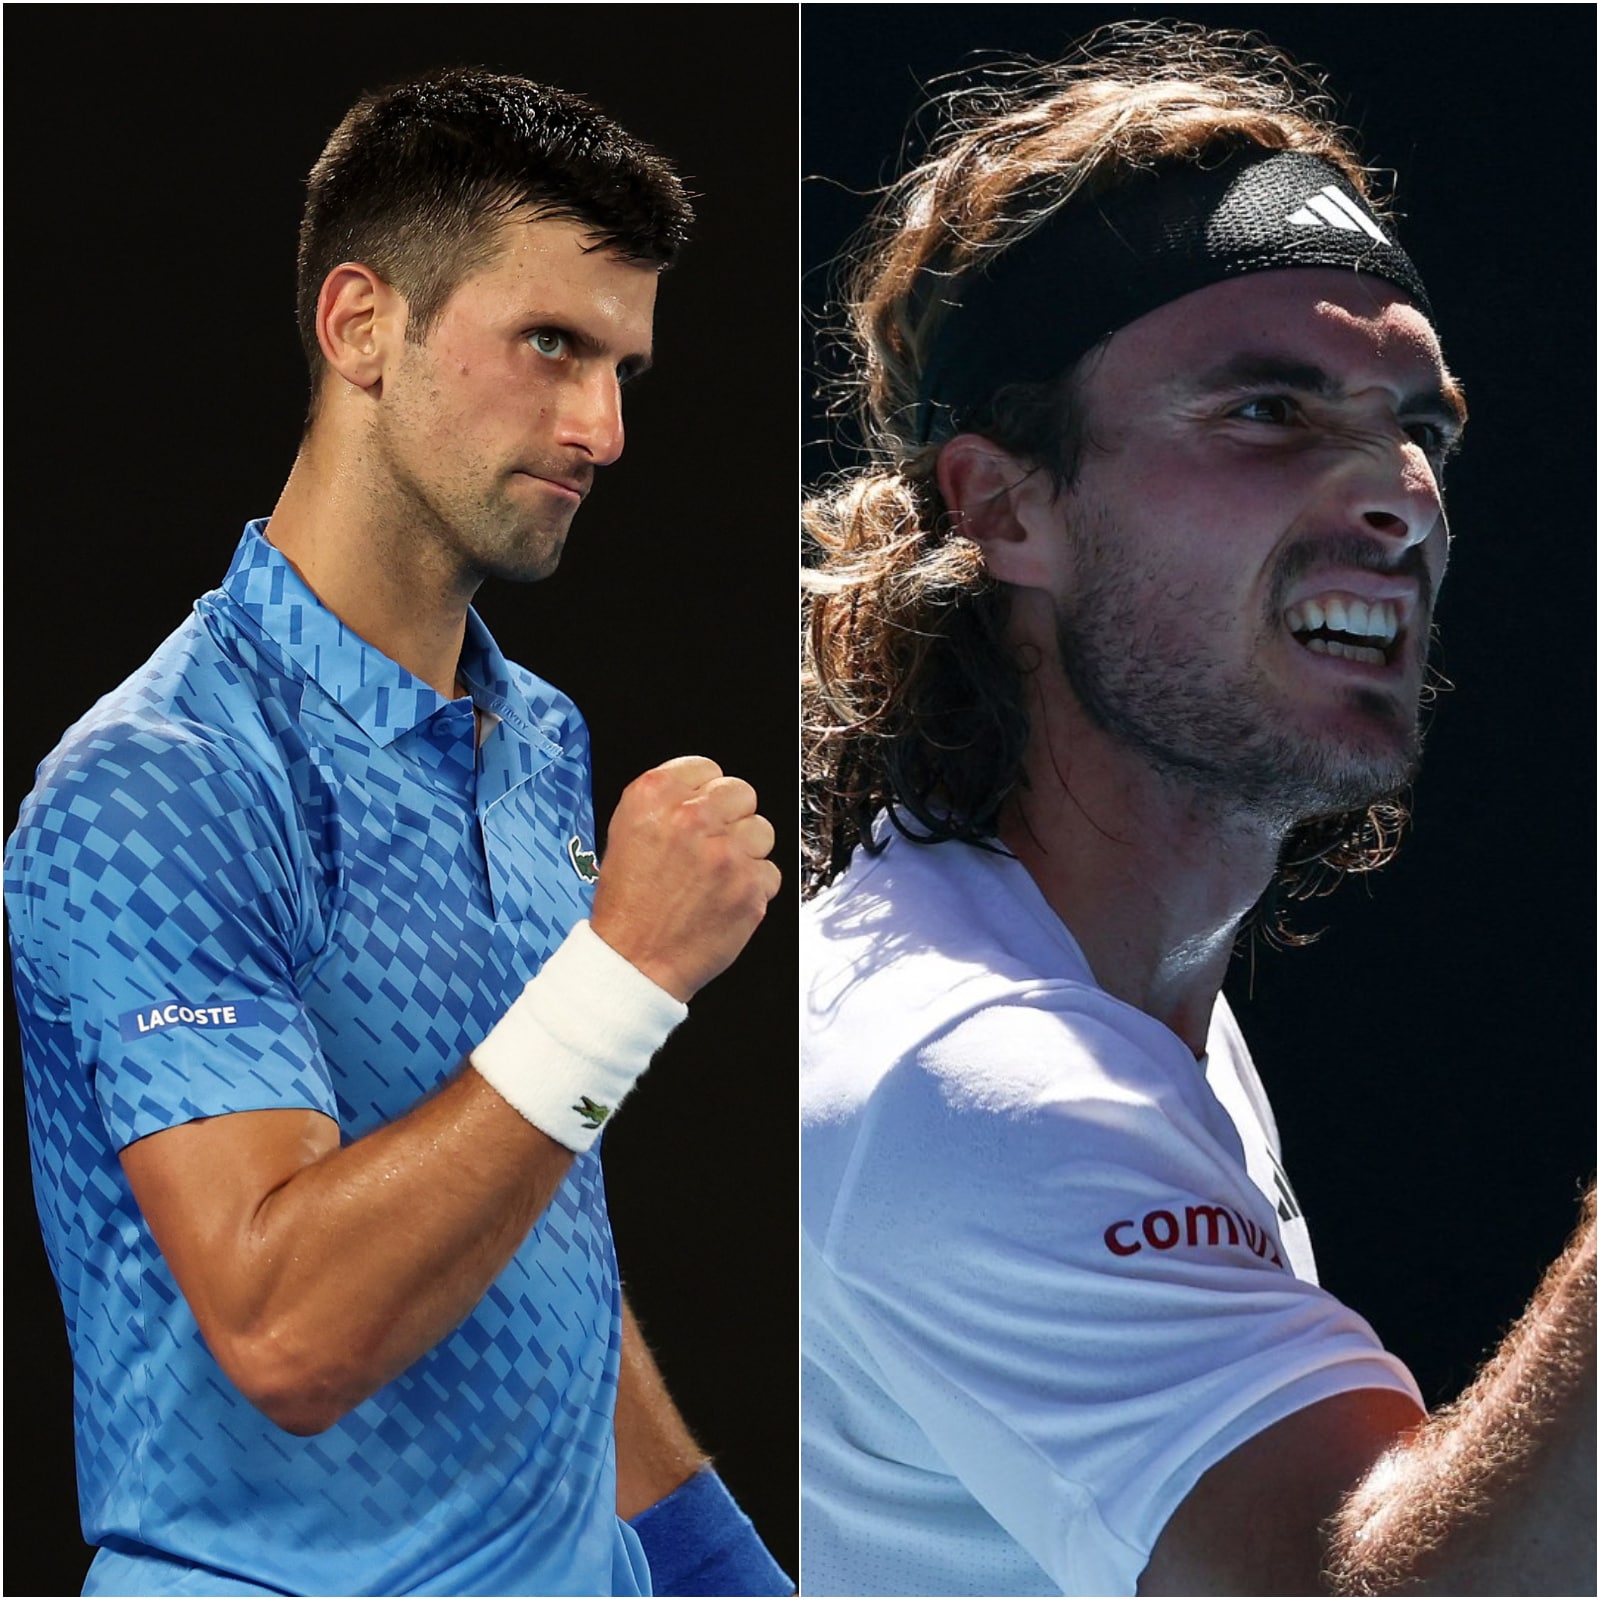 Novak Djokovic vs Stefanos Tsitsipas Live Streaming When and Where to watch the Australian Open 2023 Mens Singles Final Live?